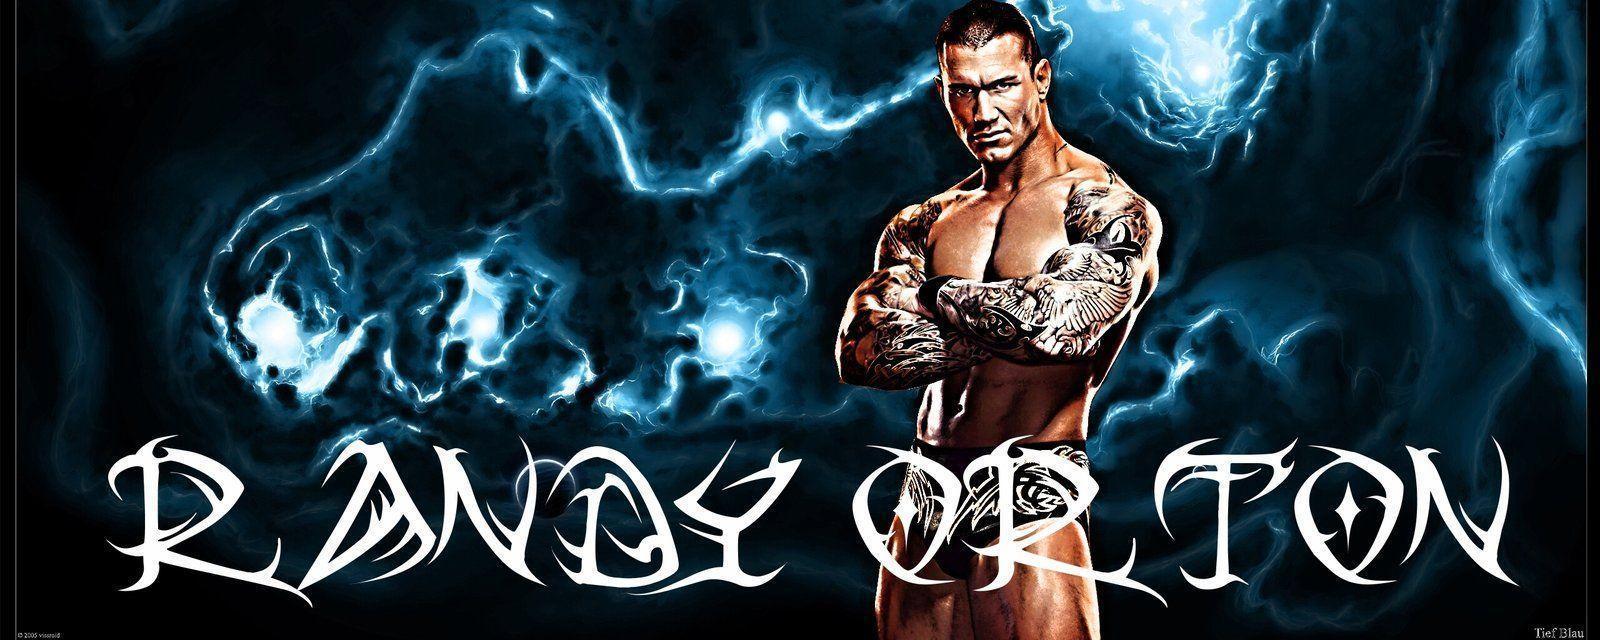 image For > Randy Orton Logo